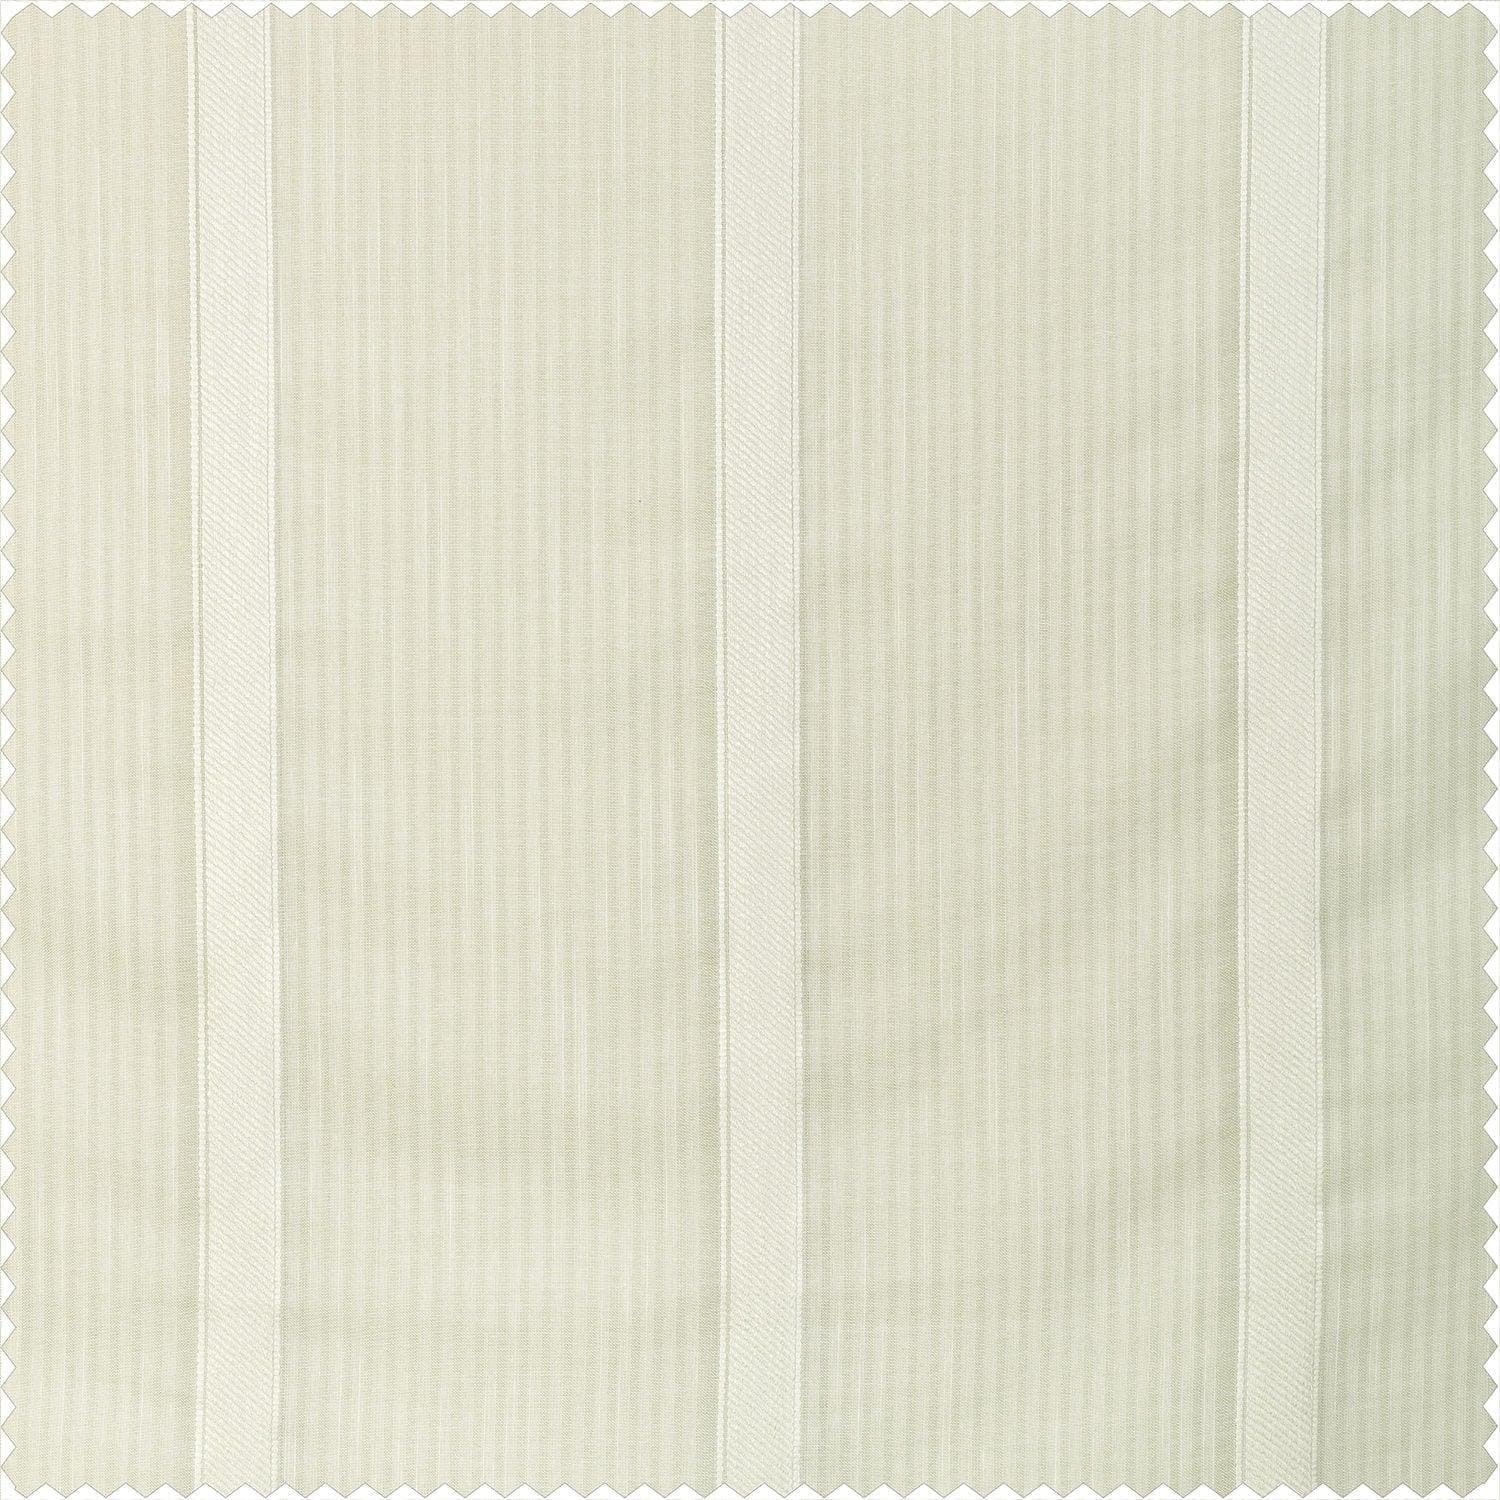 Antigua Cream Striped Linen Sheer Curtain